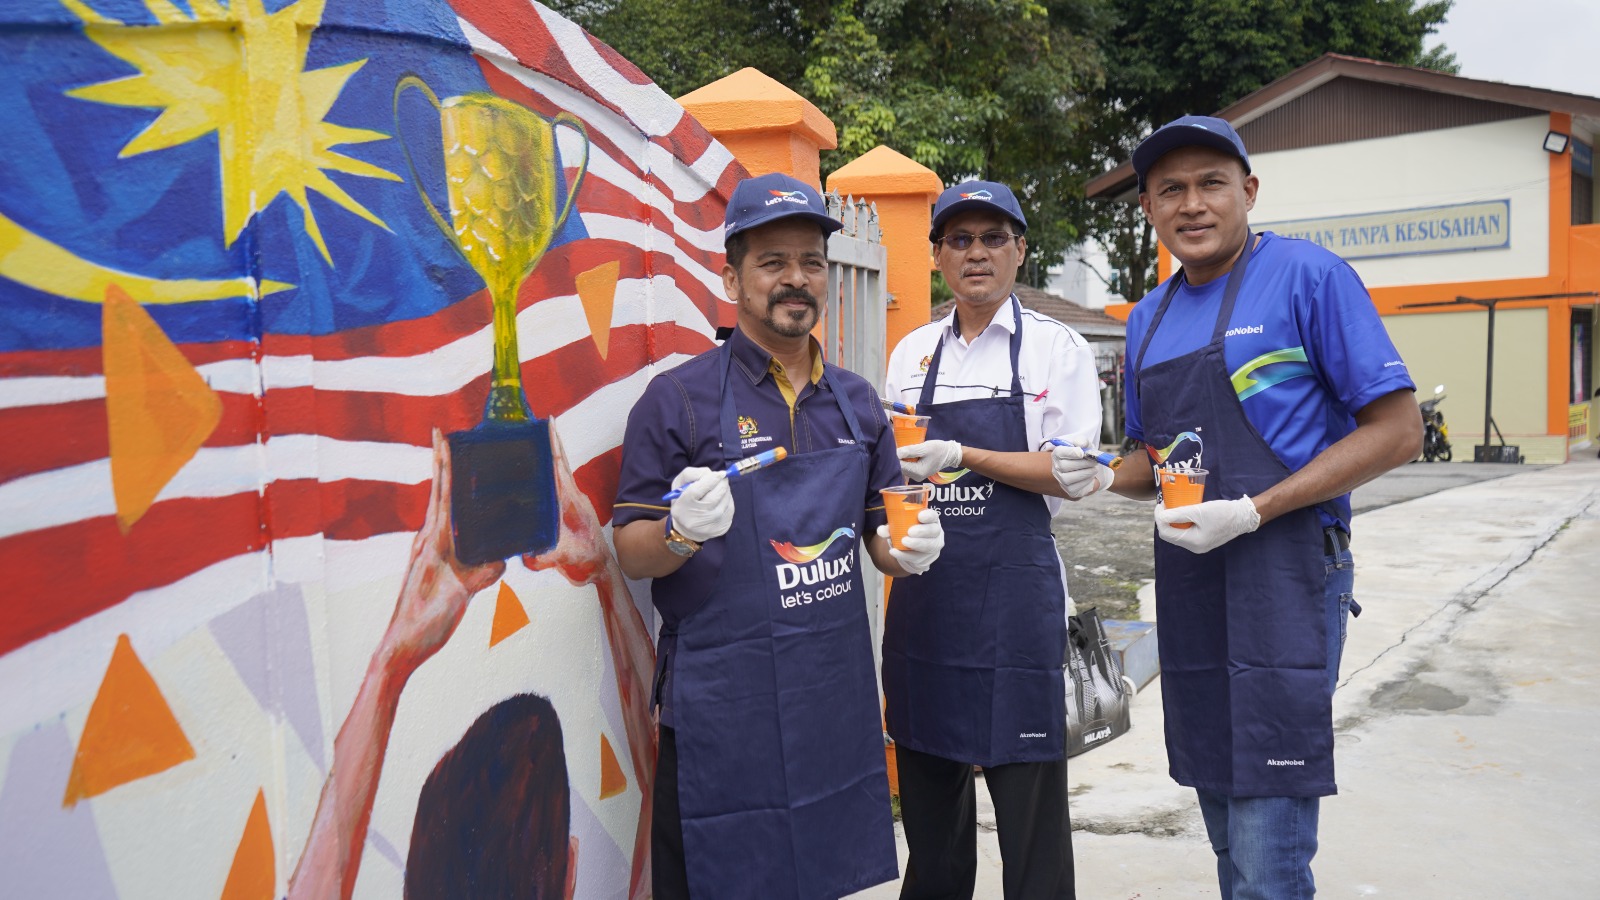 Dengan sentuhan Dulux Let’s Colour, SMK Seri Titiwangsa meriah dengan mural sukan